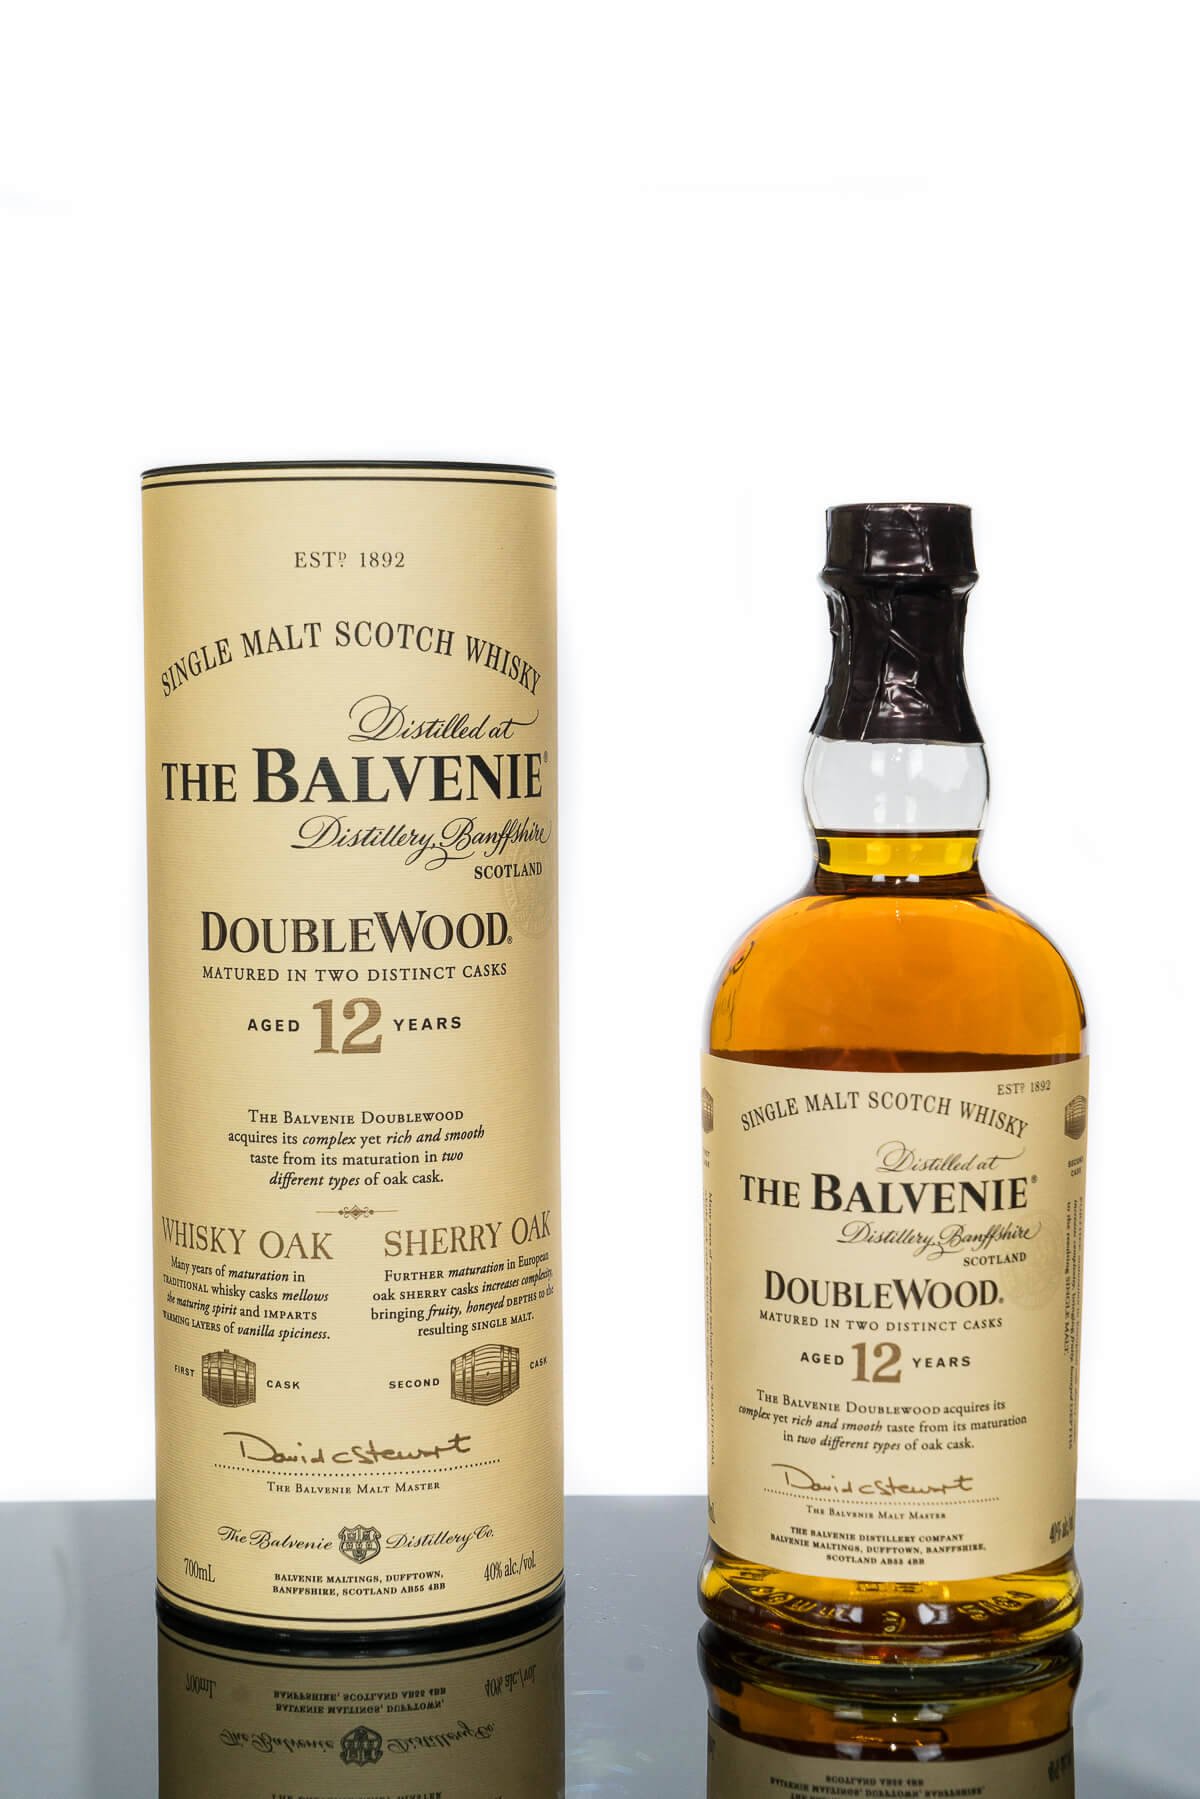 The Balvenie Doublewood Matured Two Distinct Cases Wallpaper